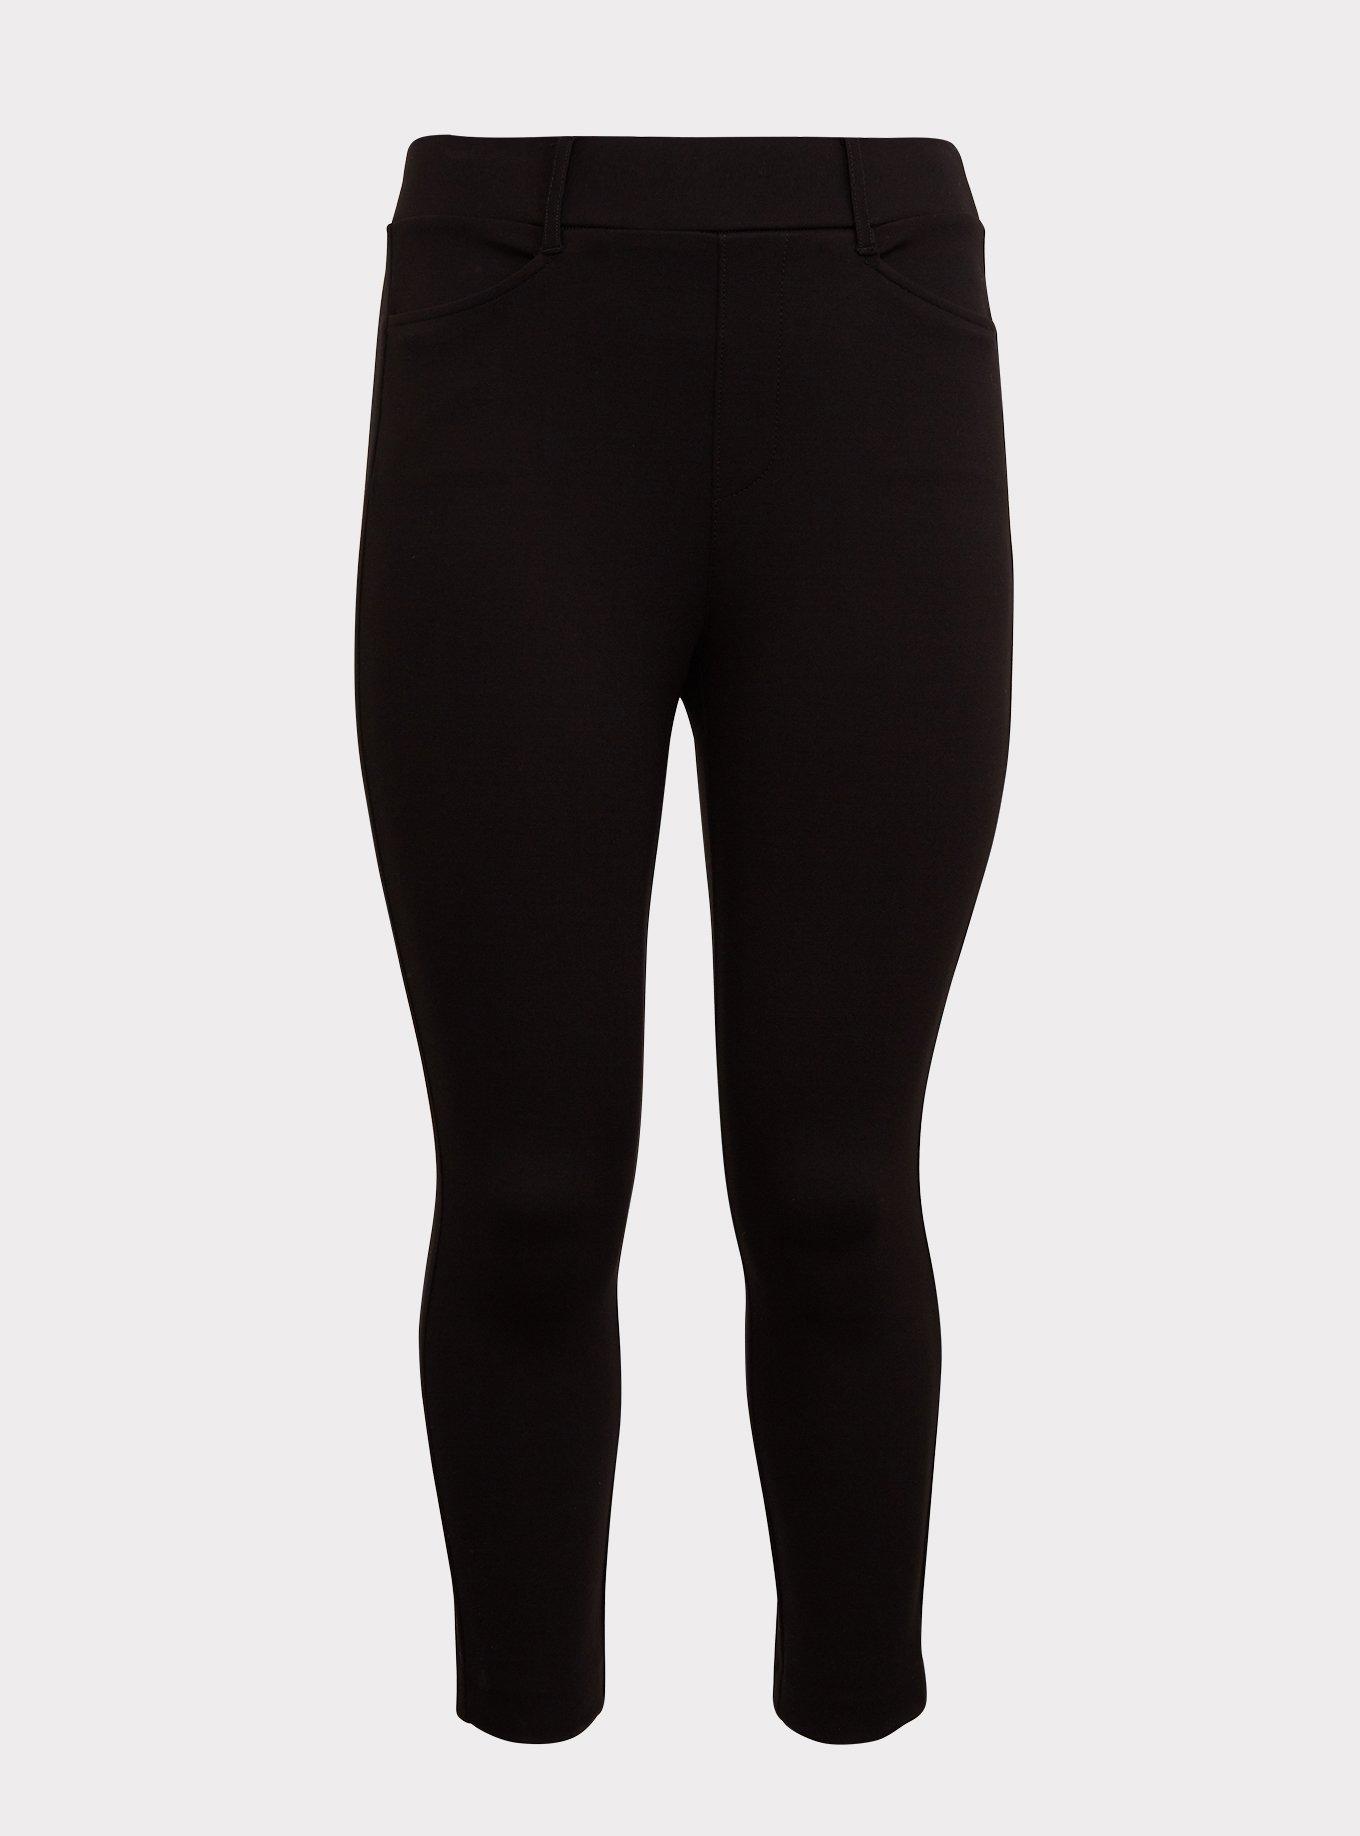 Torrid women's black pants size 3R Rayon/nylon/spandex pull-on style